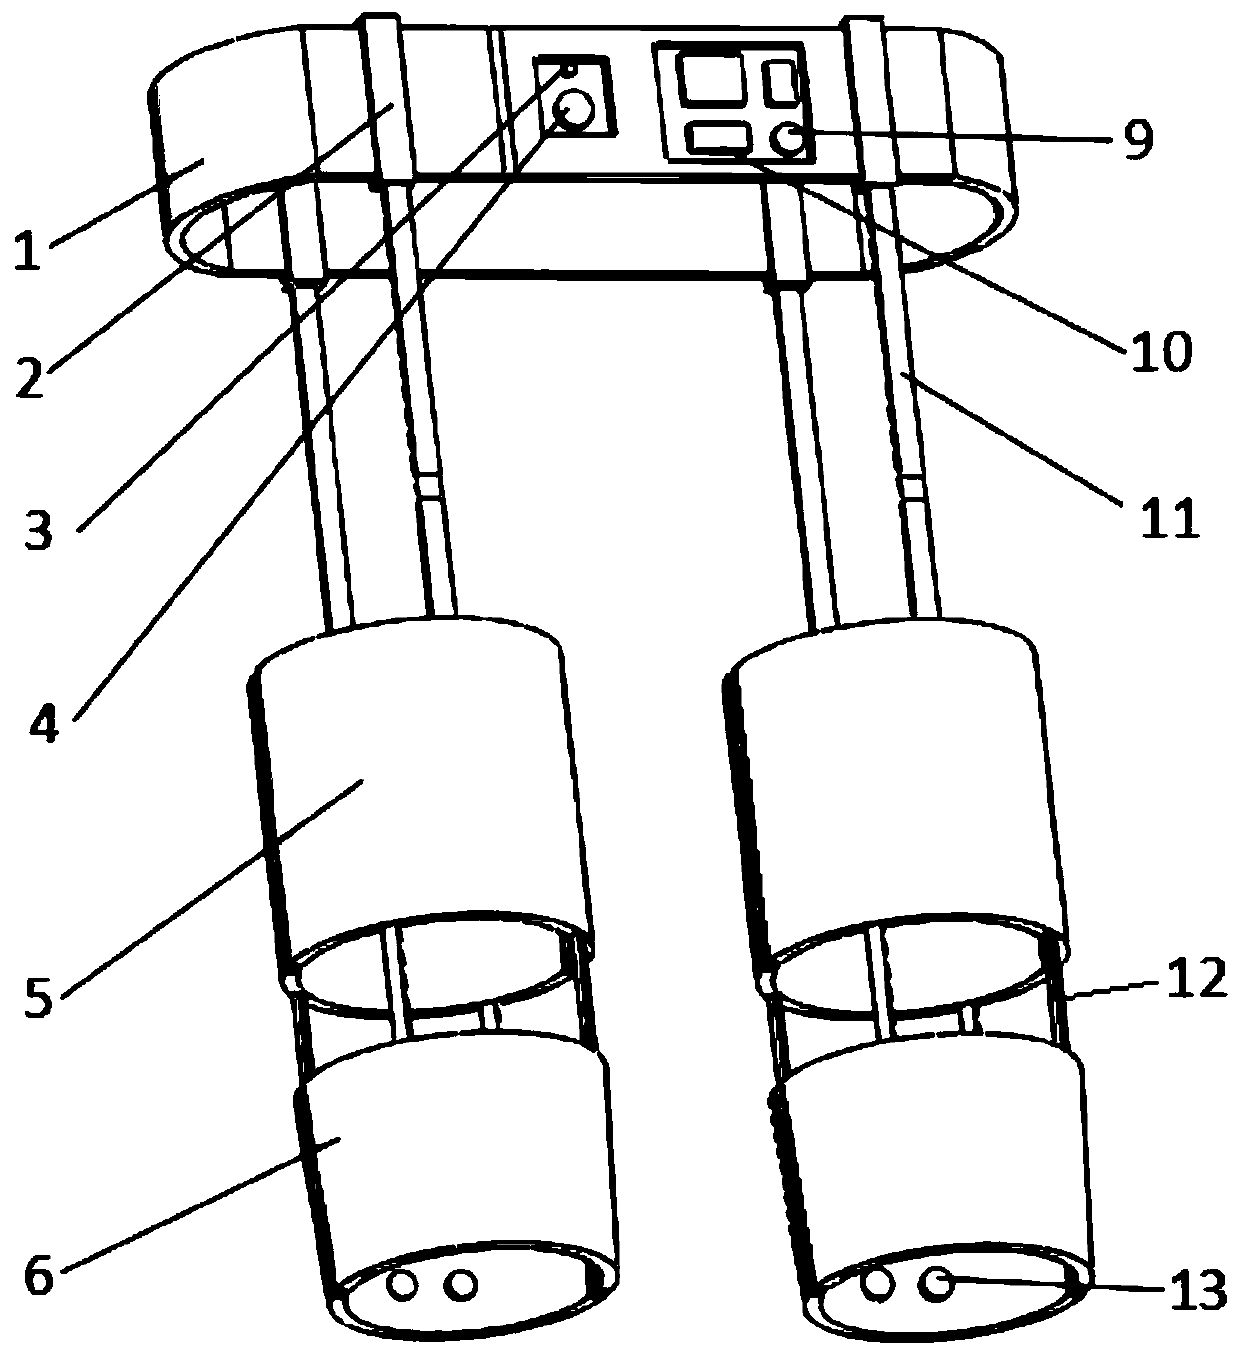 An inflatable O-shaped leg correction device